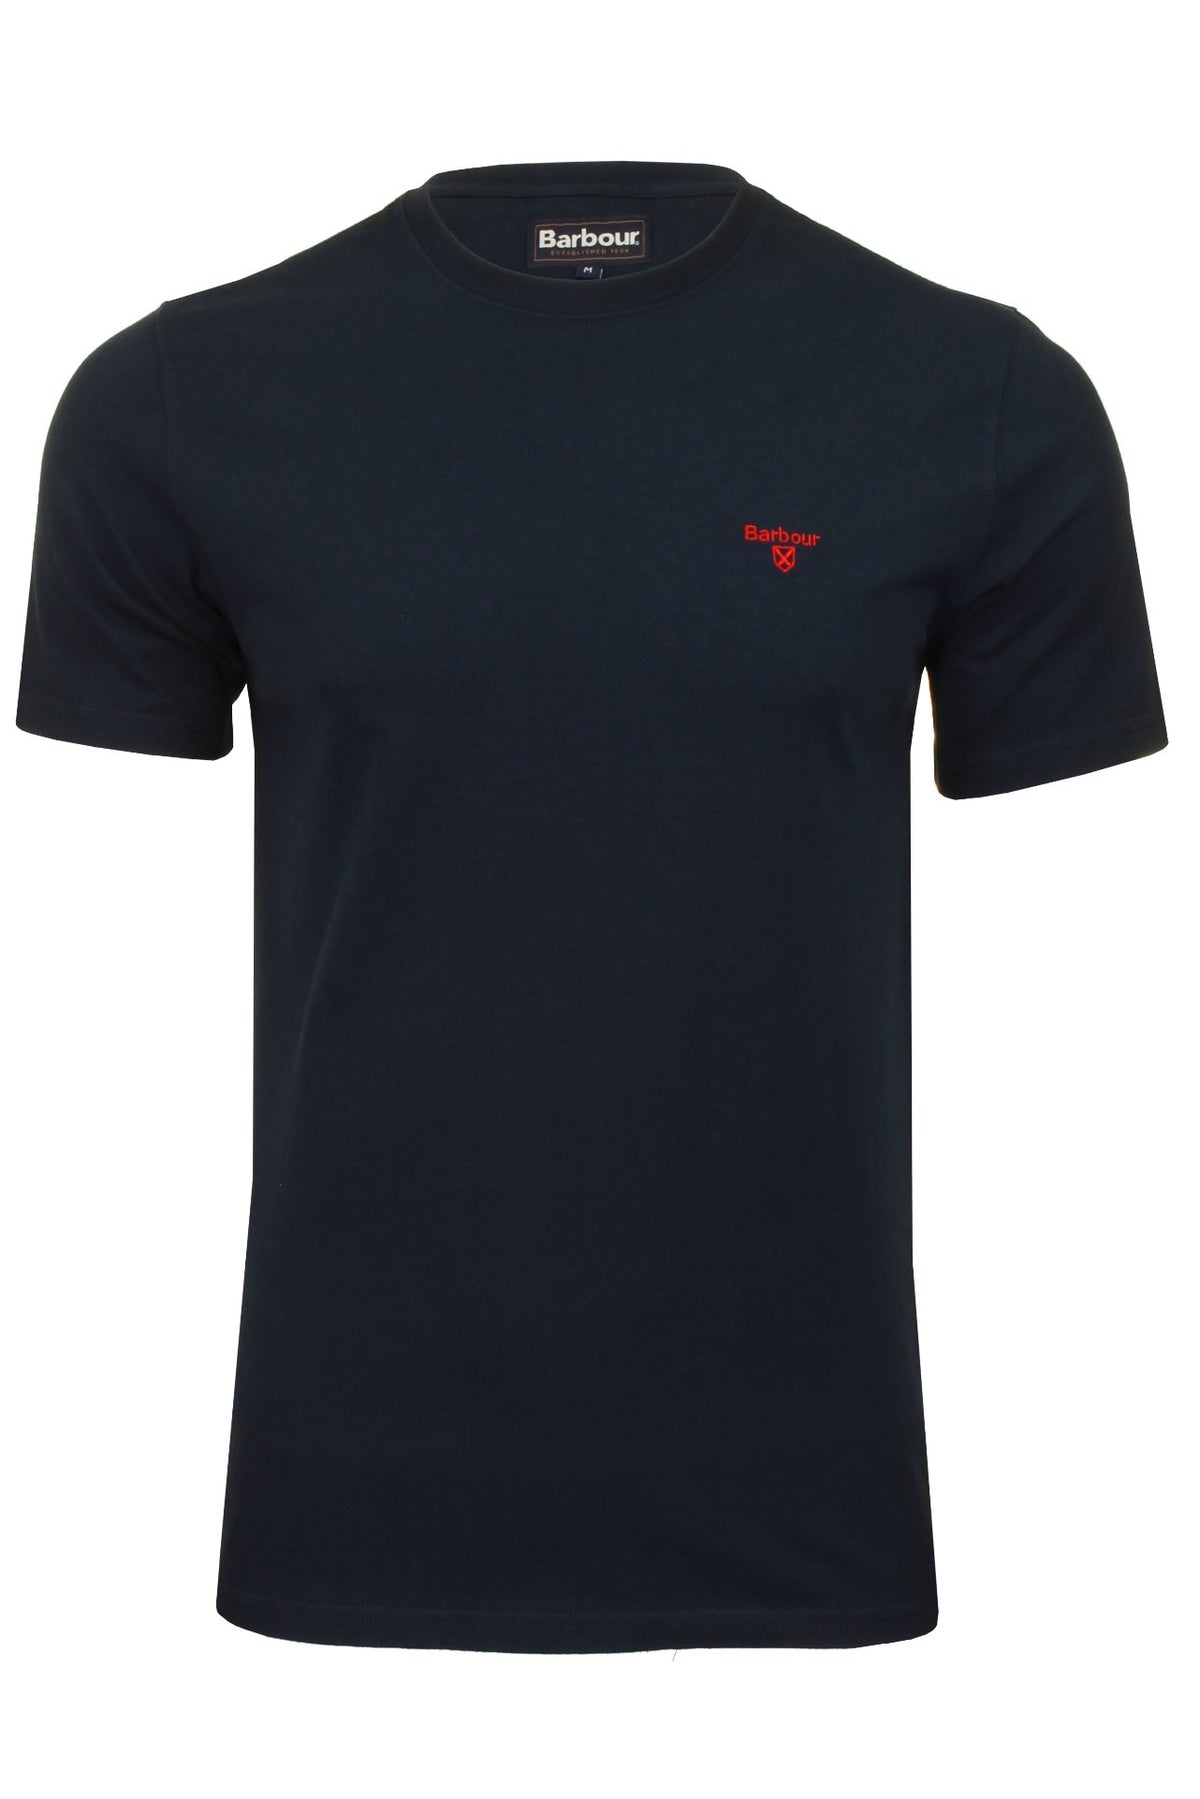 Barbour Men's Sports T-Shirt - Short Sleeved, 01, Mts0331, Navy